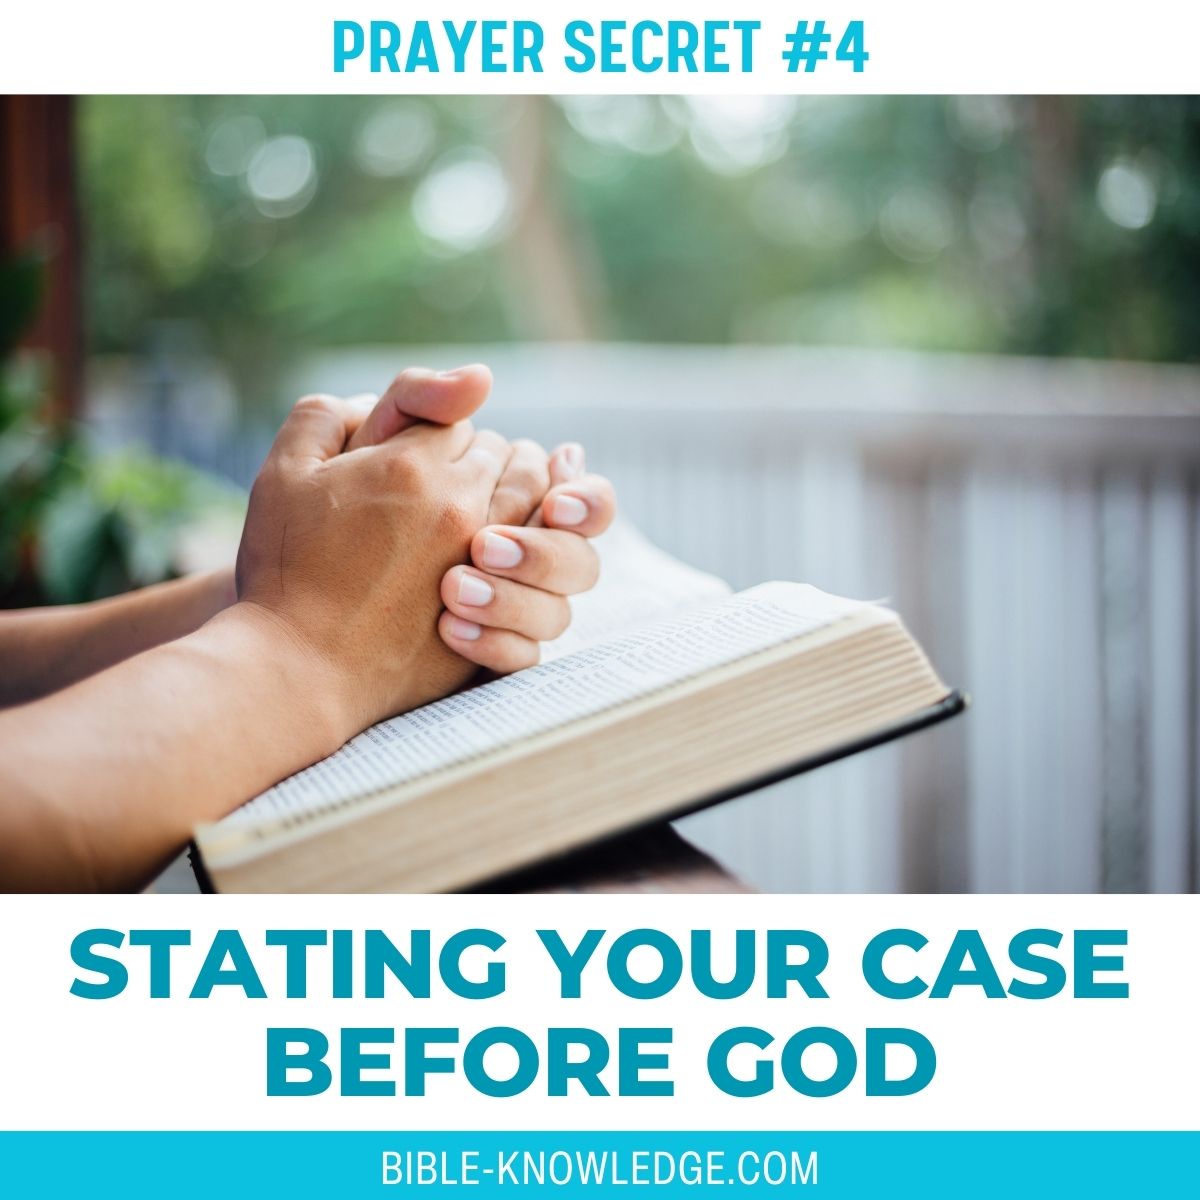 Prayer Secret #4 - Stating Your Case Before God